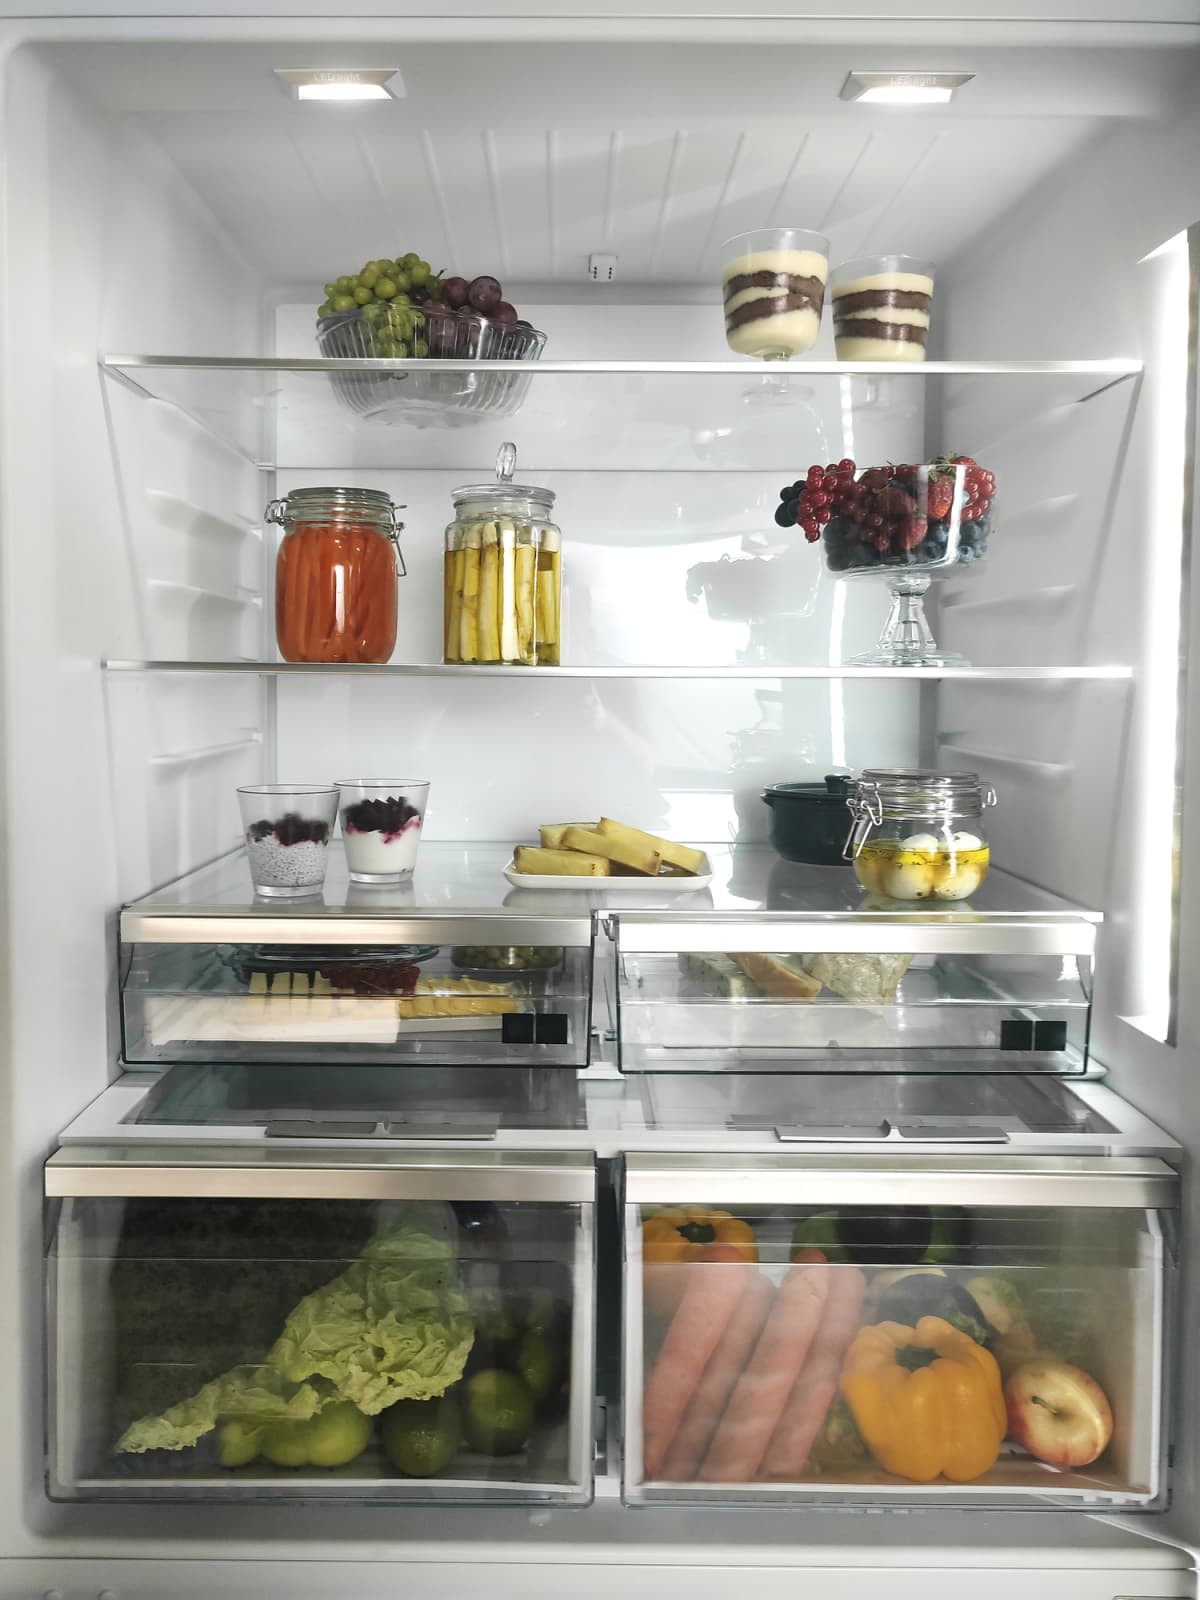 Vegetables and jars inside the refrigerator